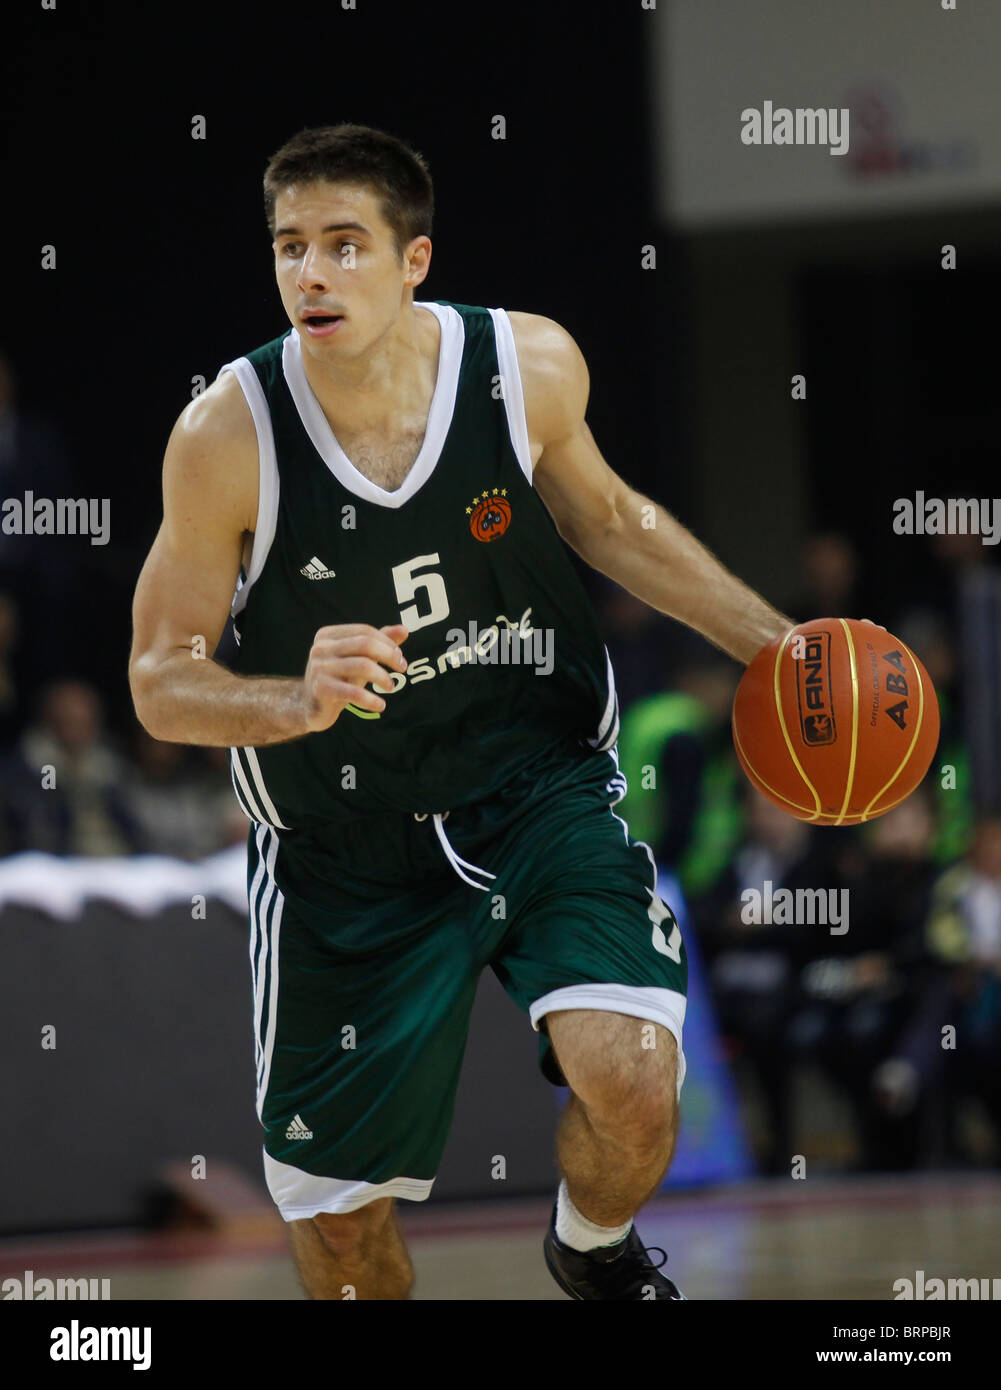 Panathinaikos basketball greece hi-res stock photography and images - Alamy